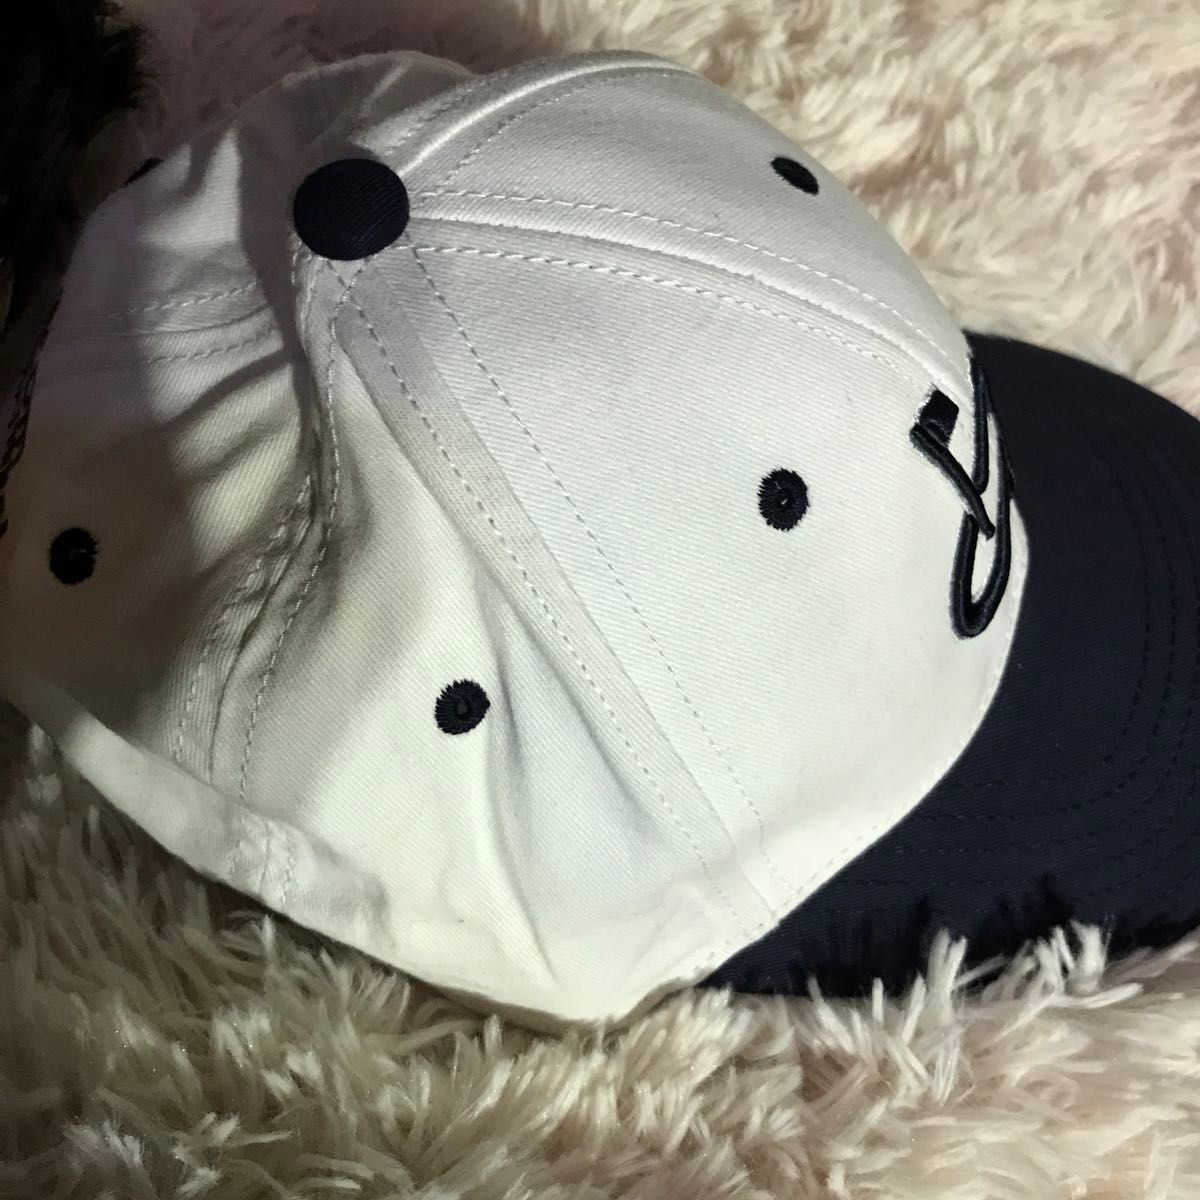  G O L Fゴルフキャップ 帽子 白 ホワイト×ネイビー刺繍ロゴスナップバックアジャスター調整可能55から59センチ